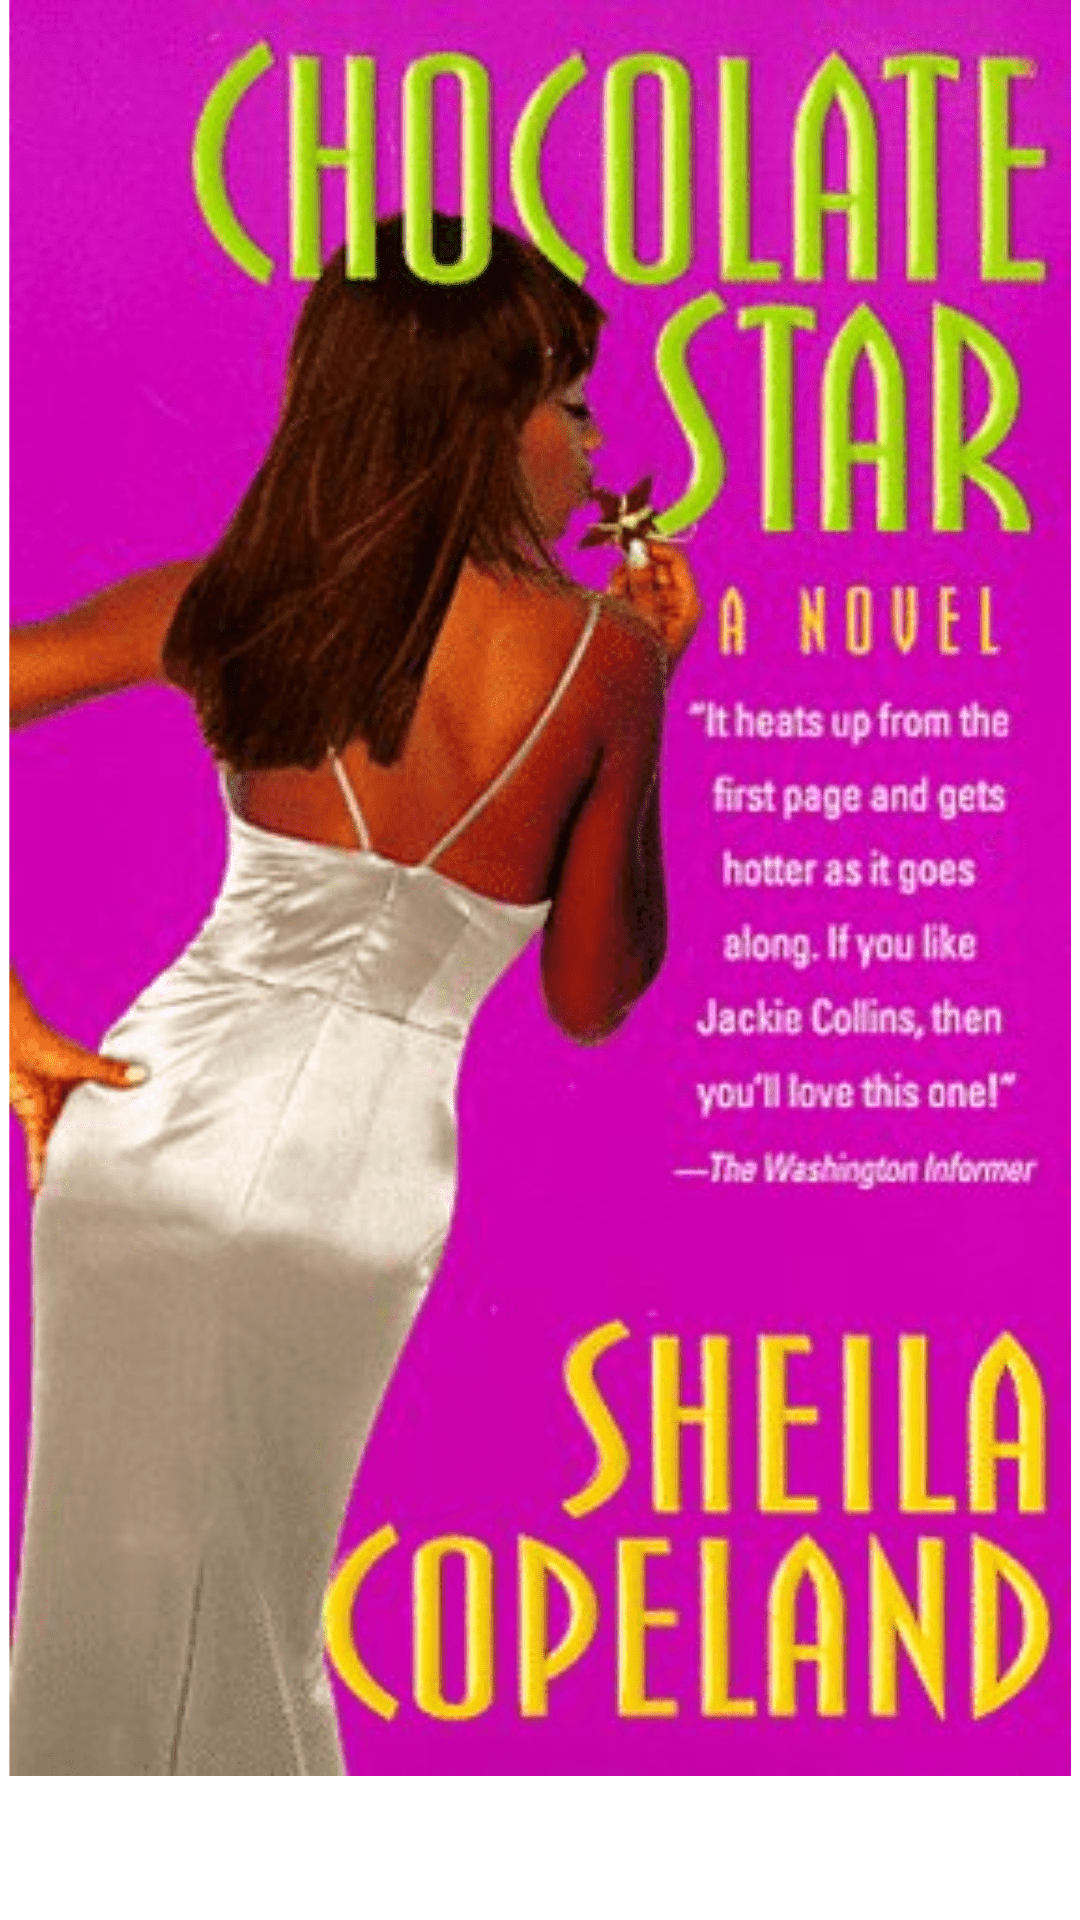 Chocolate Star by Sheila Copeland